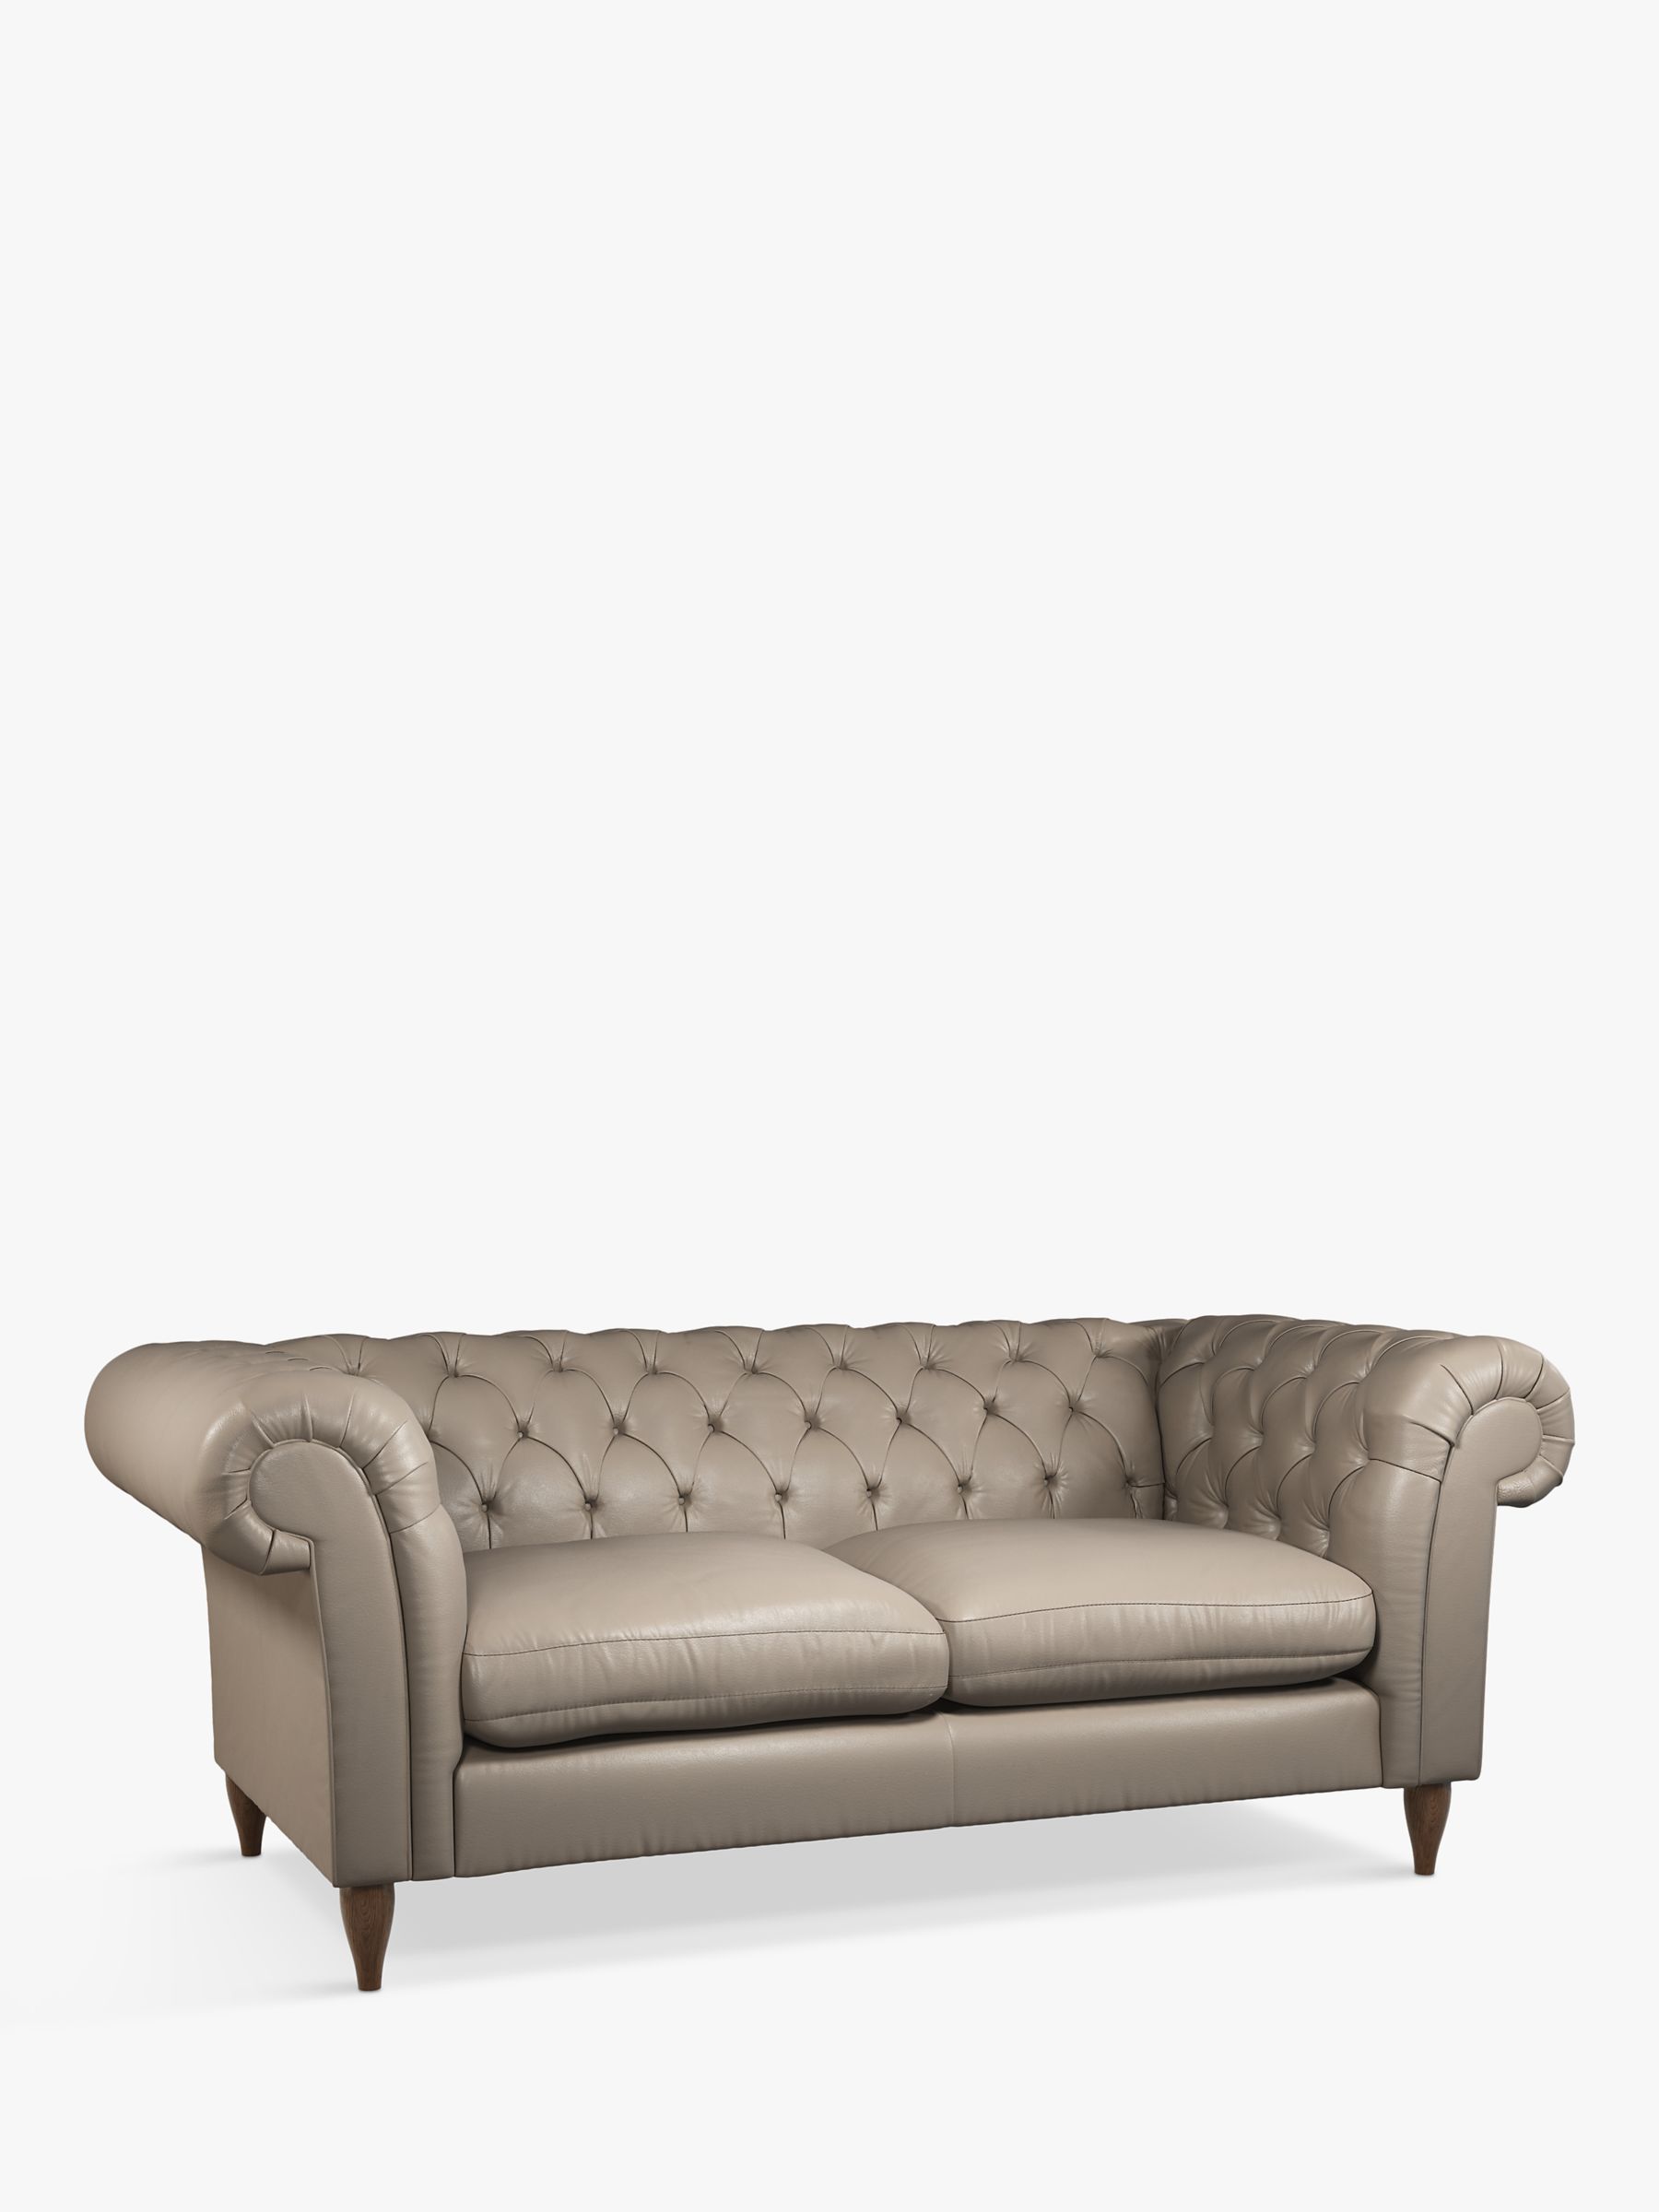 Cromwell Range, John Lewis Cromwell Chesterfield Large 3 Seater Leather Sofa, Dark Leg, Nature Putty